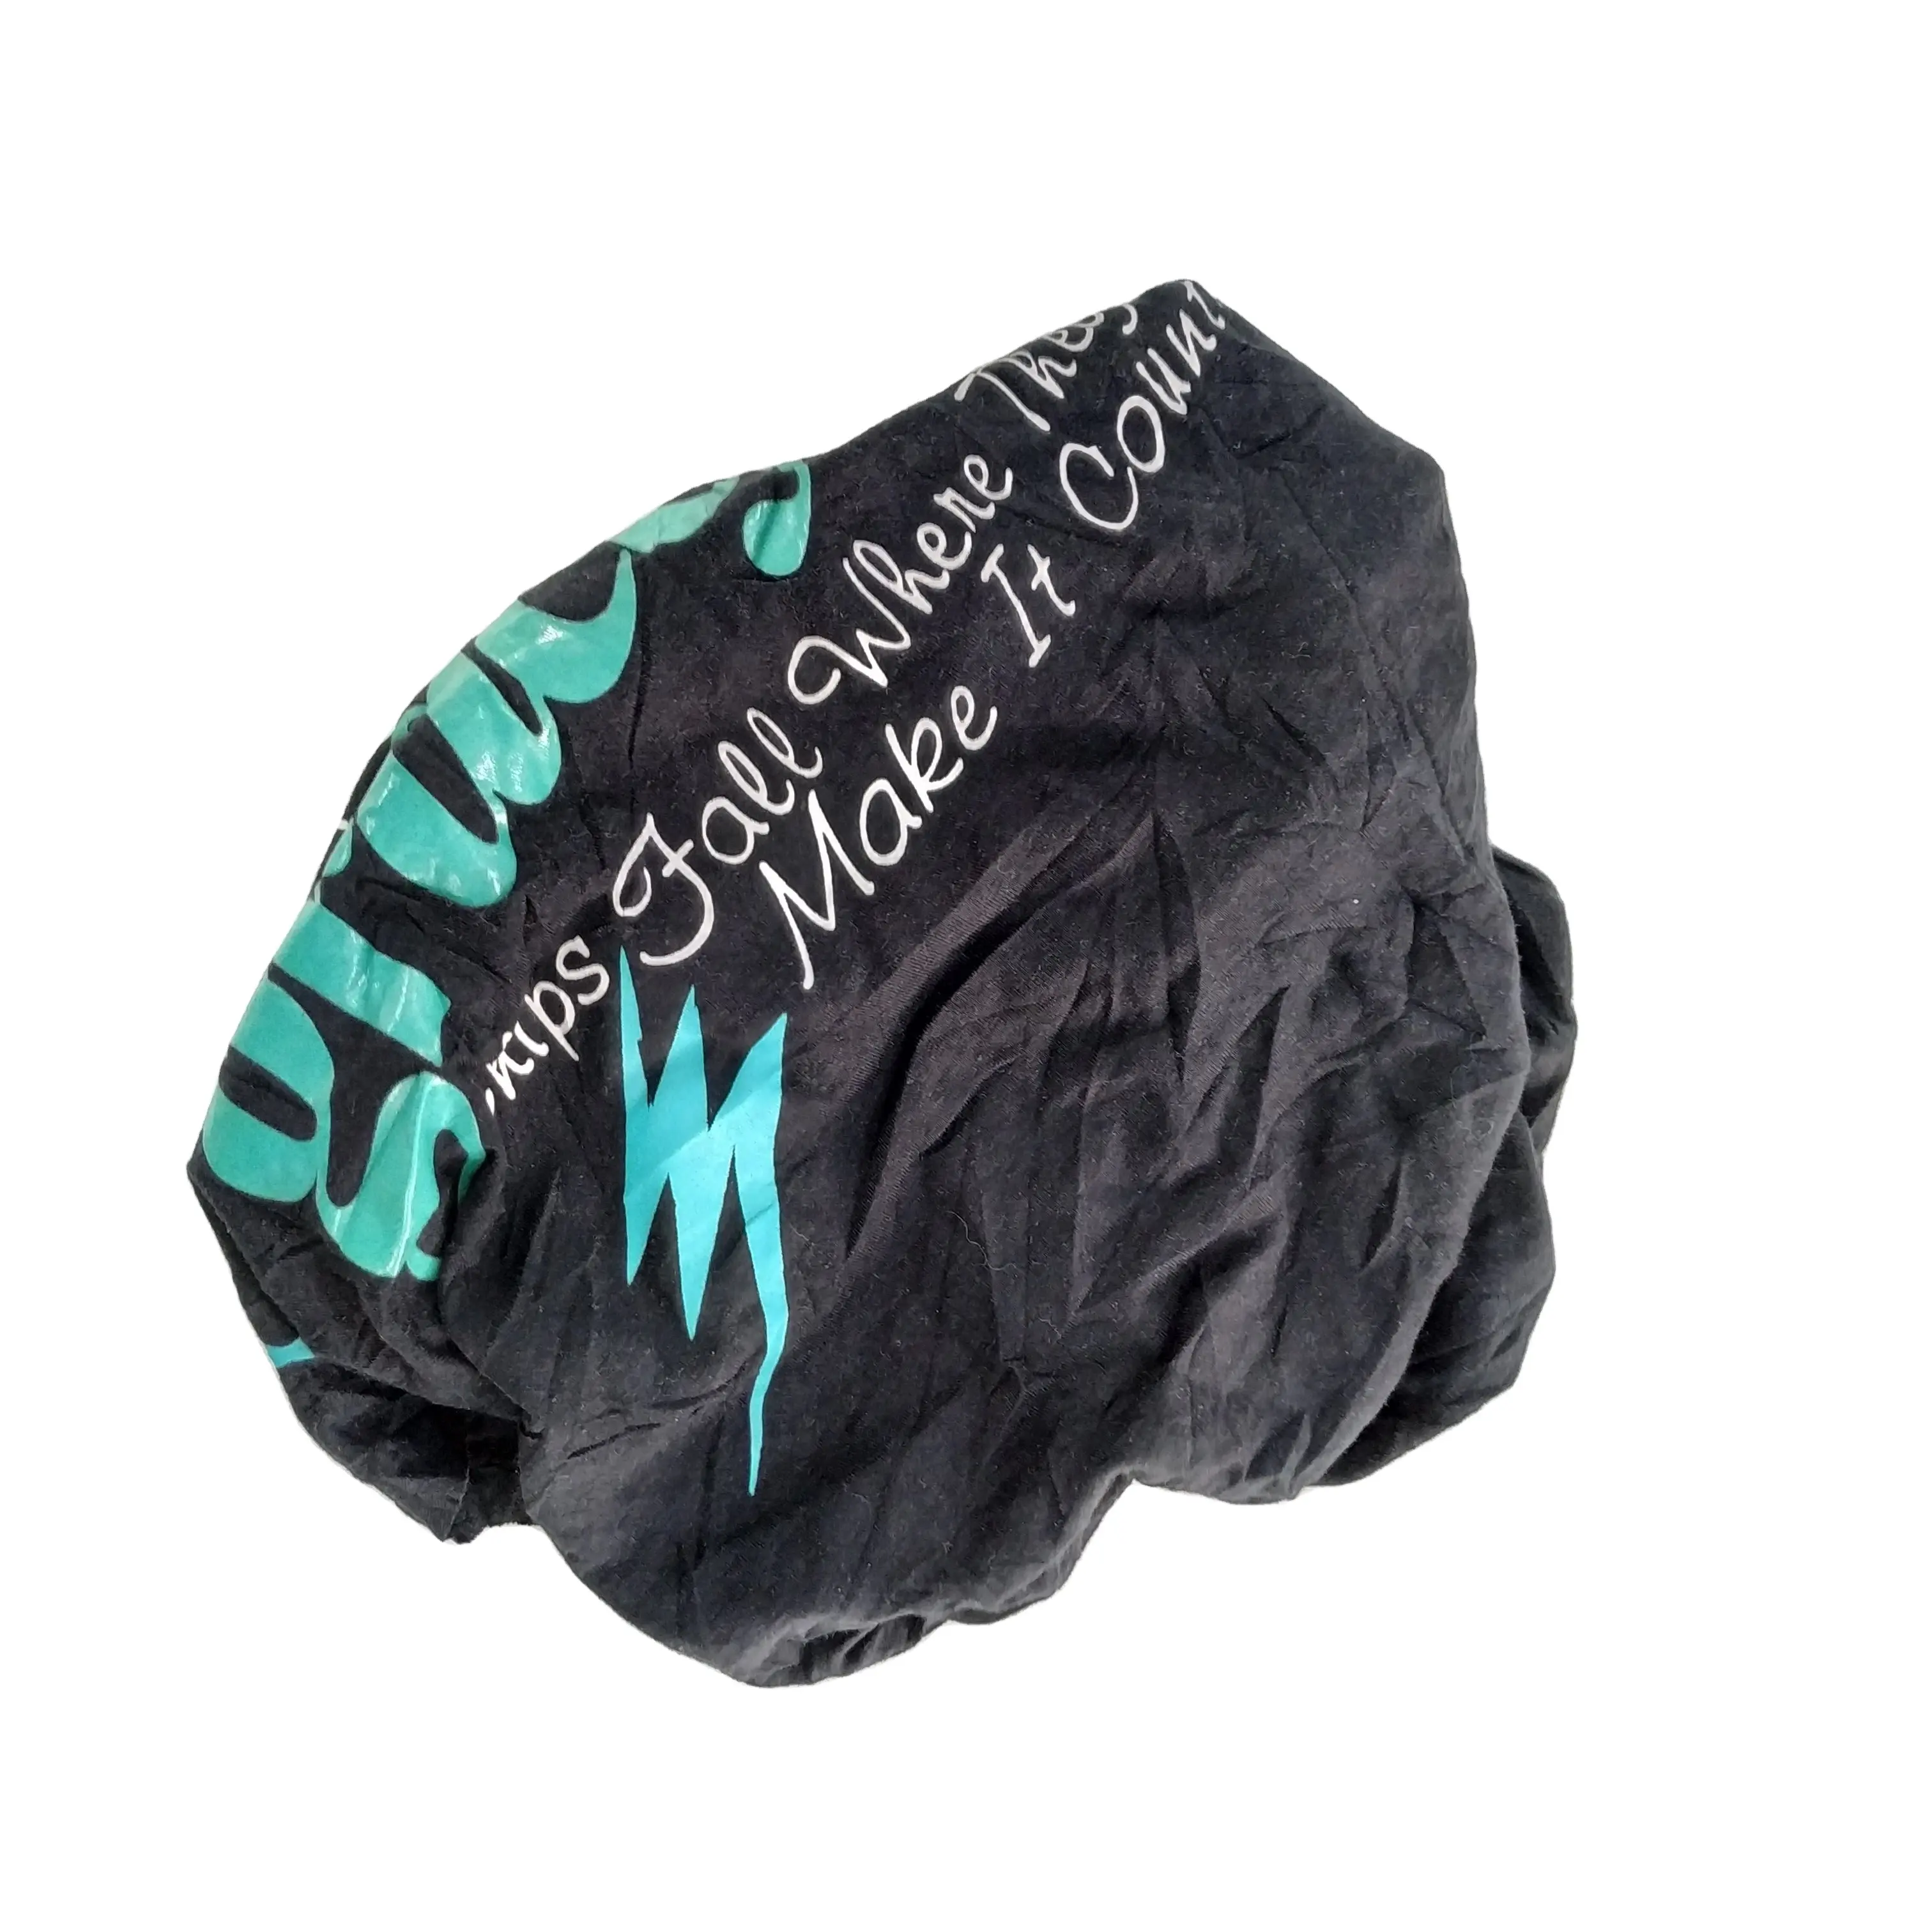 Manual cut garment scraps recycled dark color printed t shirt rags industrial wiping rags